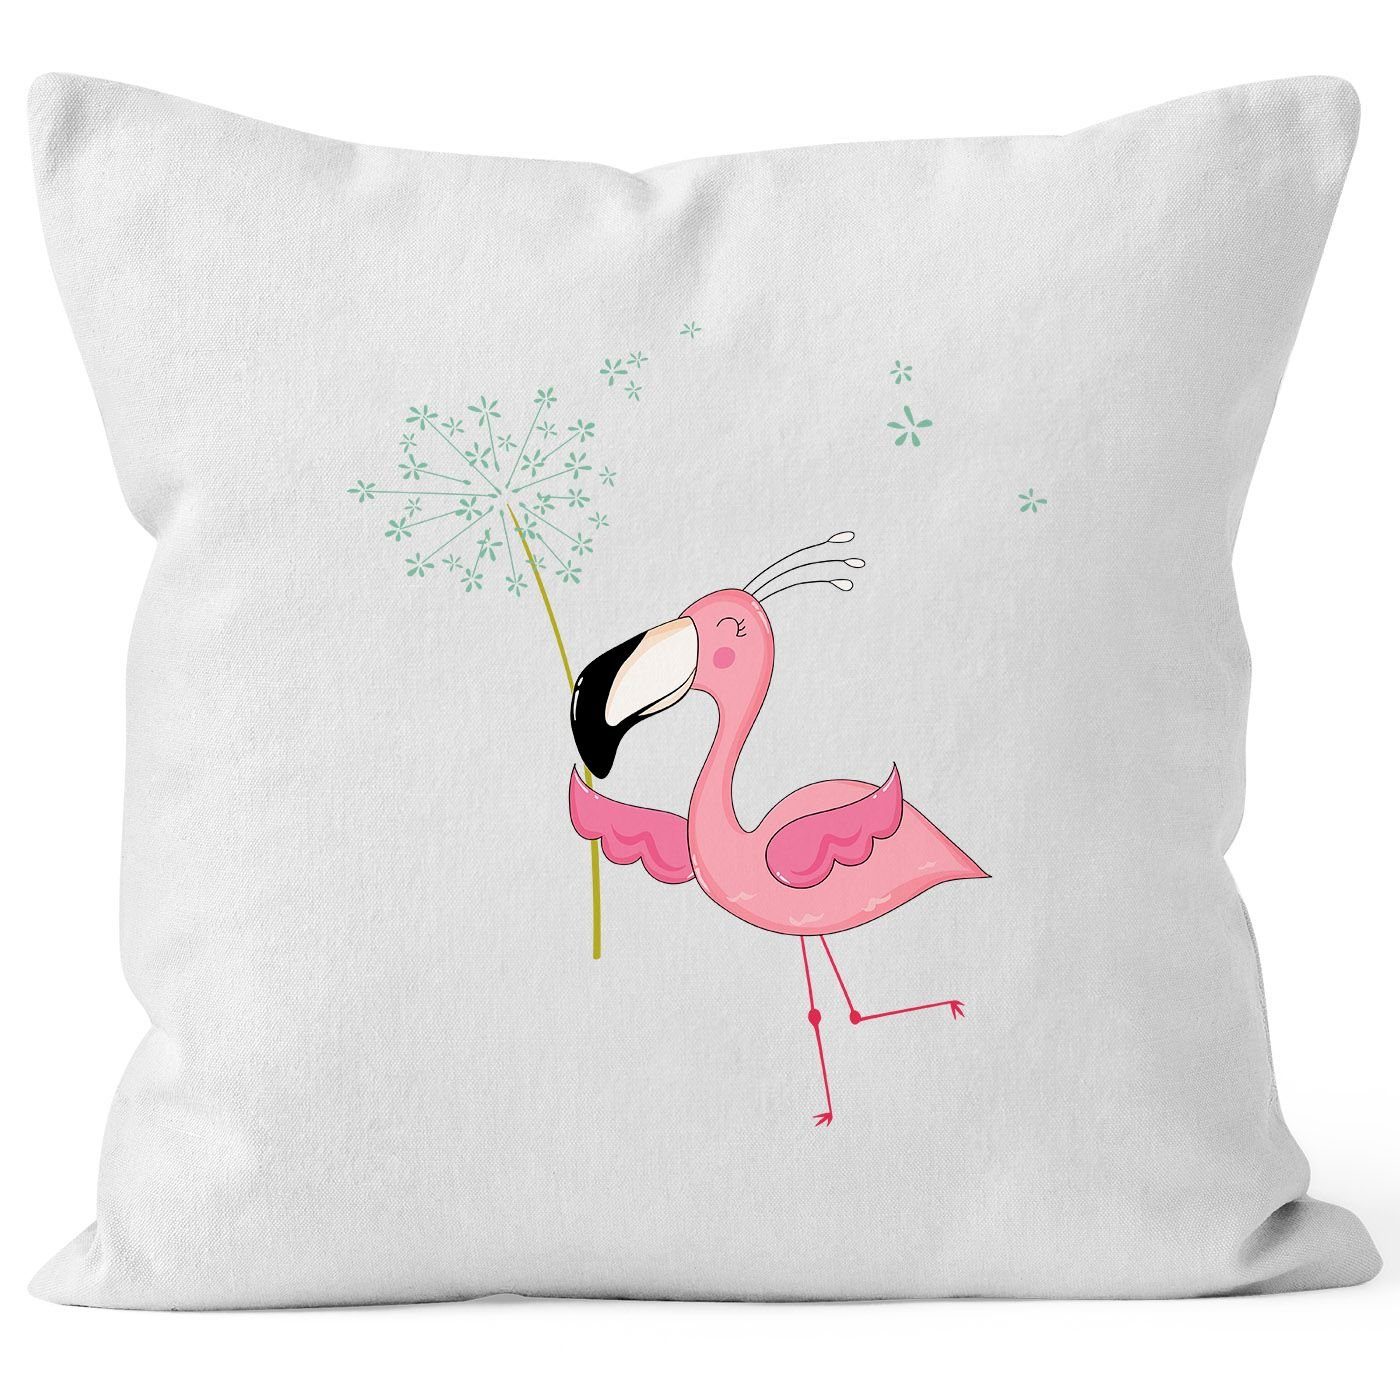 Kissen-Hülle Baumwolle weiß MoonWorks® Dandelion Pusteblume Dekokissen MoonWorks Flamingo Kissen-Bezug Deko-Kissen